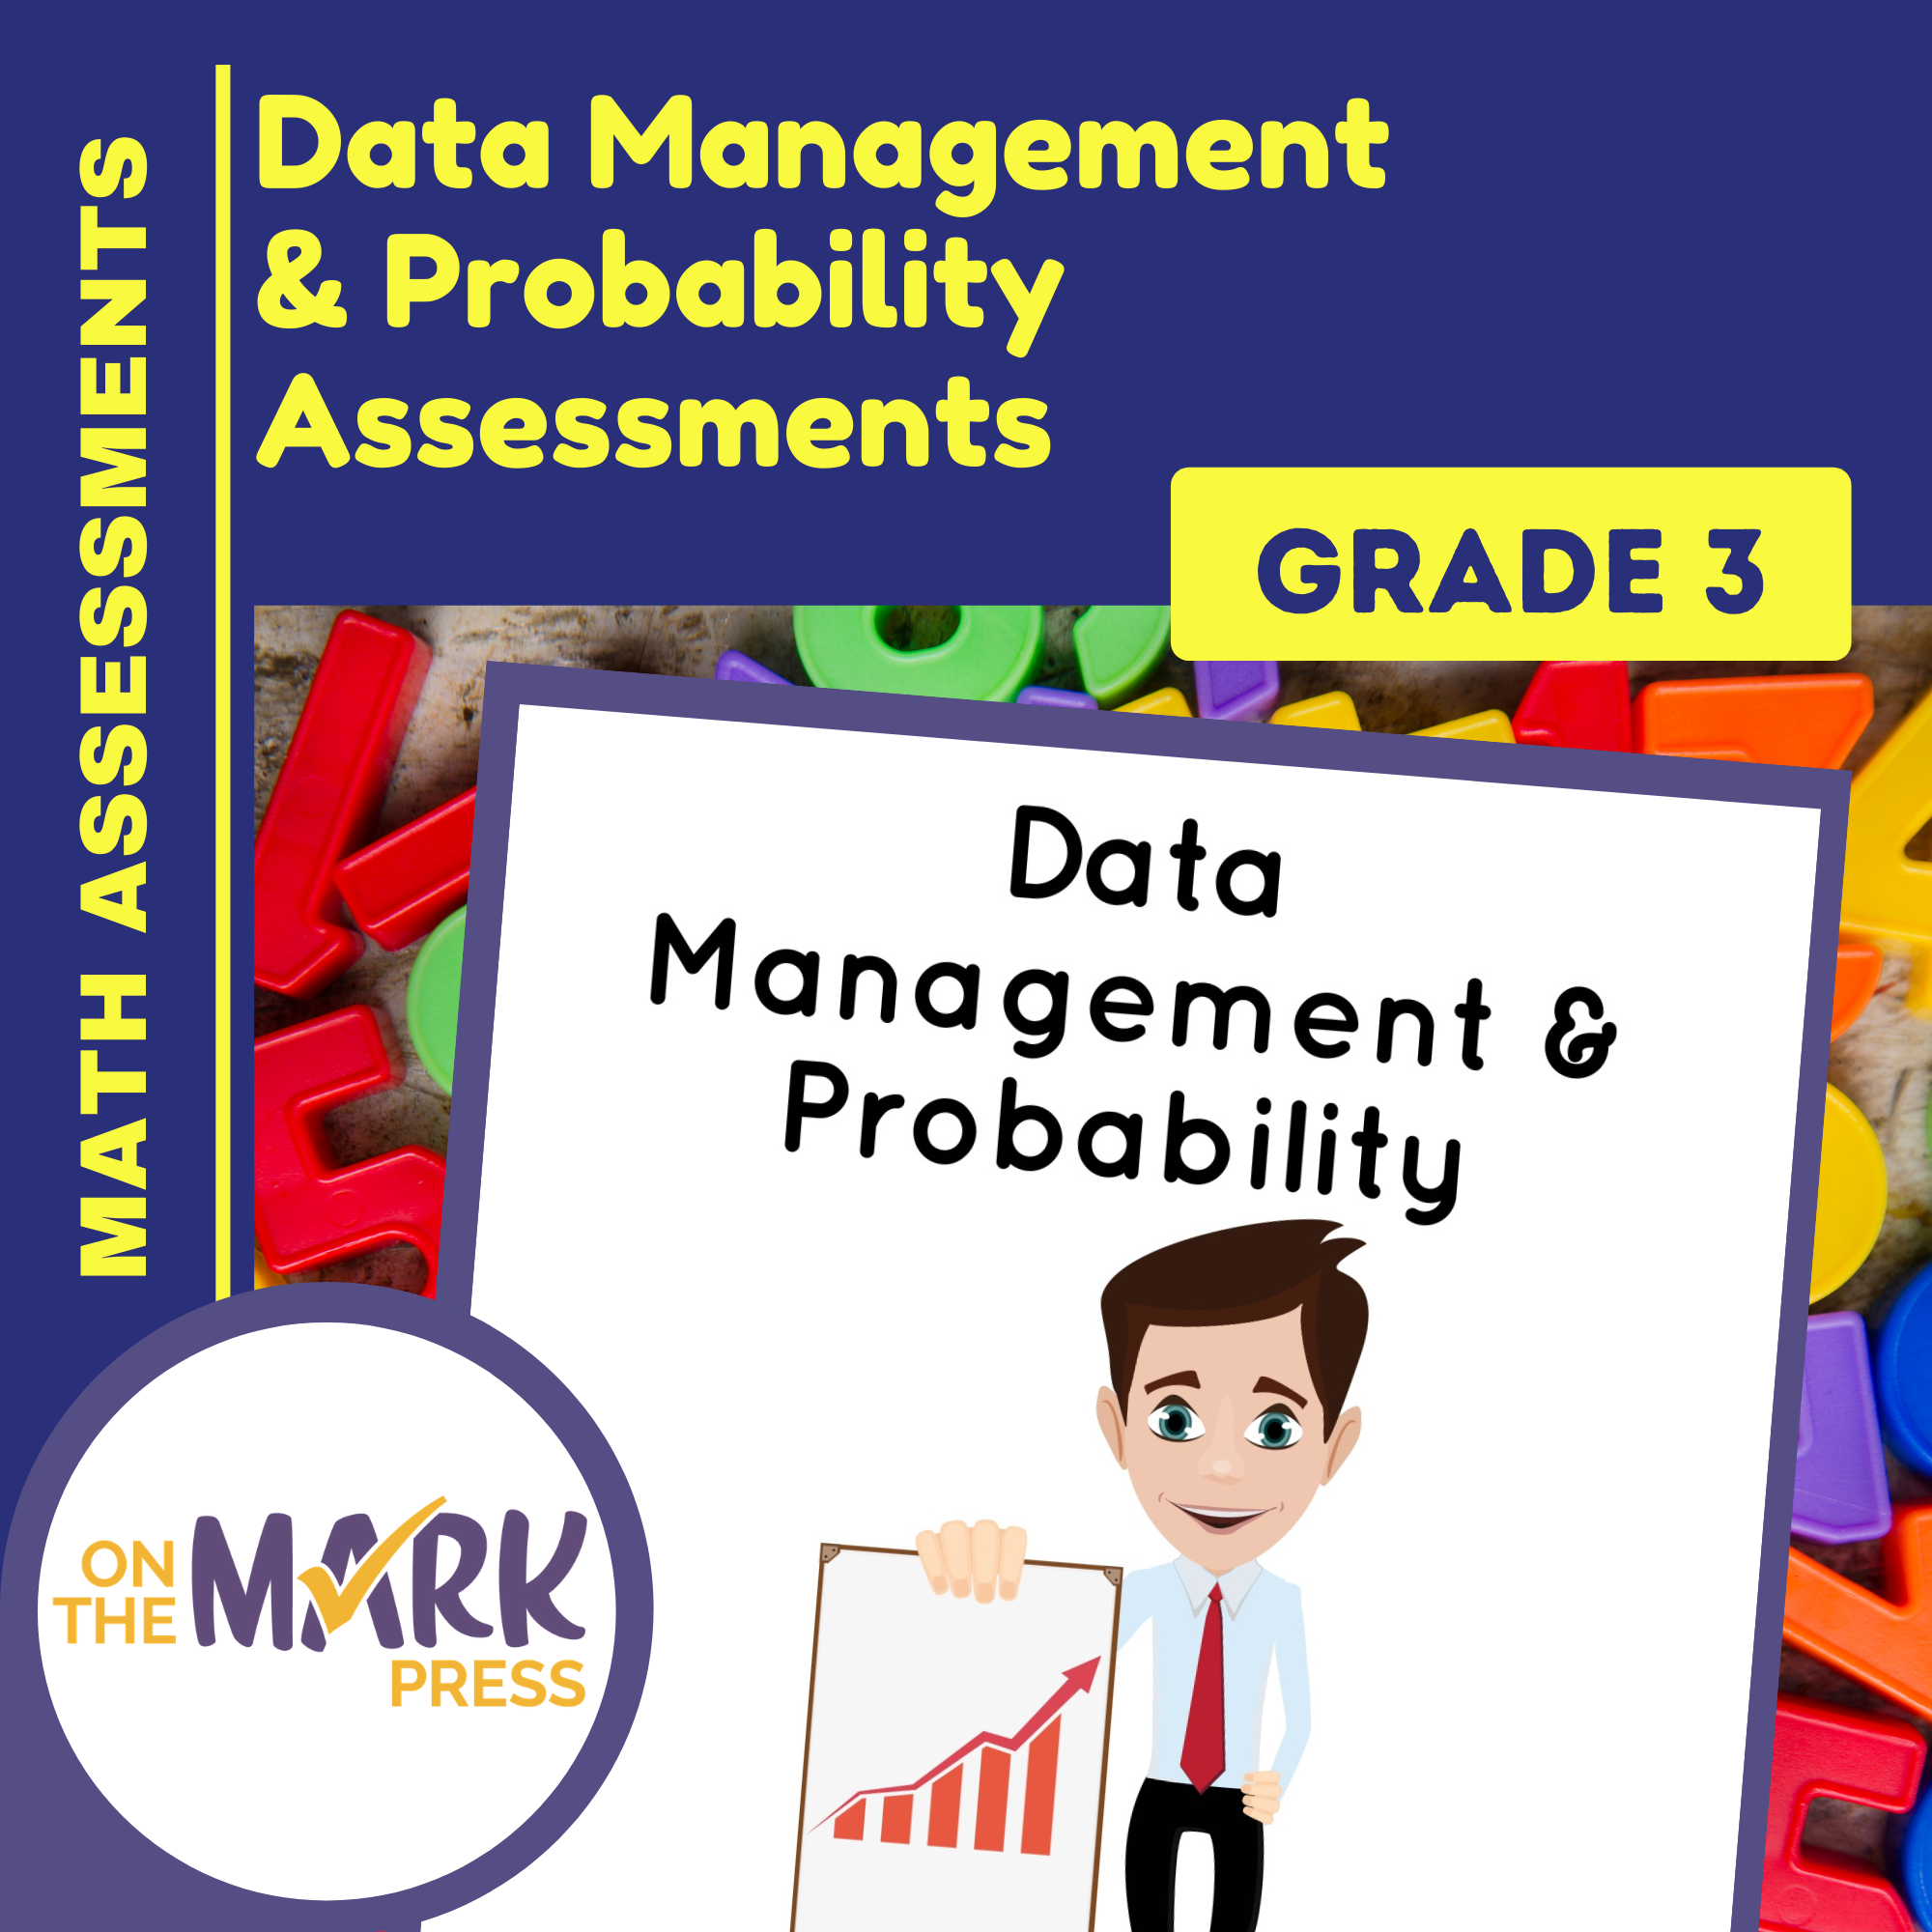 Data Management & Probability Assessment Grade 3